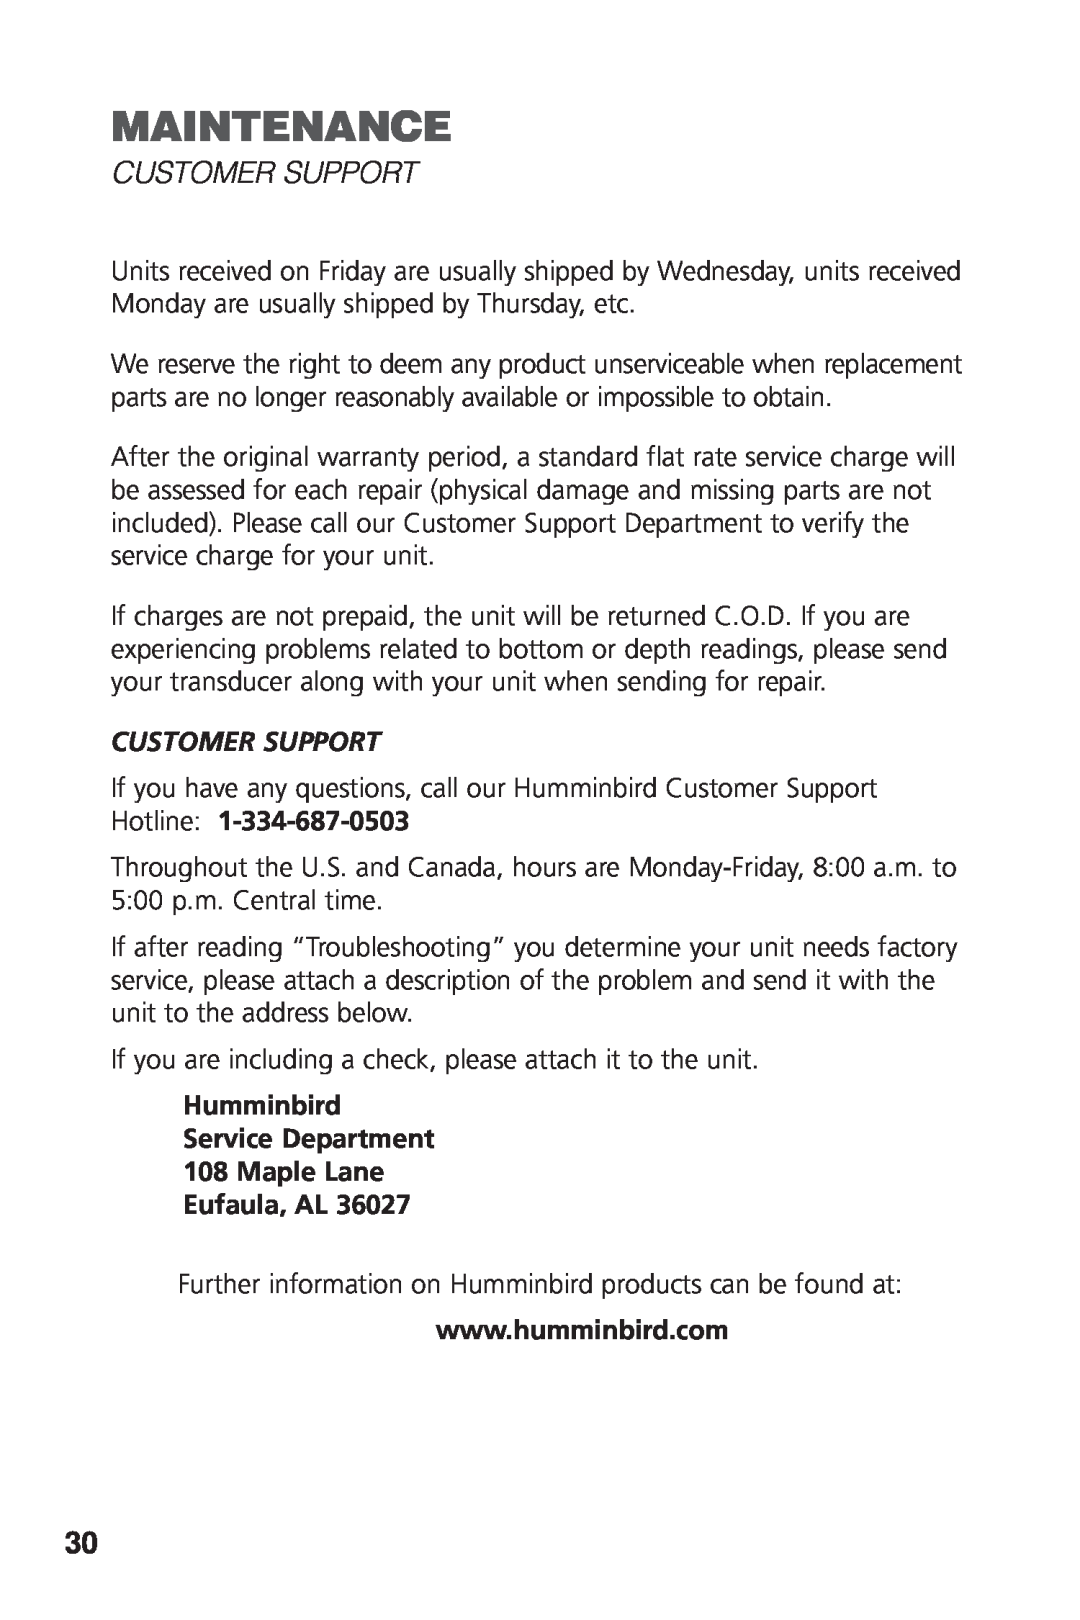 Humminbird 405SX manual Customer Support, Humminbird Service Department 108 Maple Lane Eufaula, AL, Maintenance 